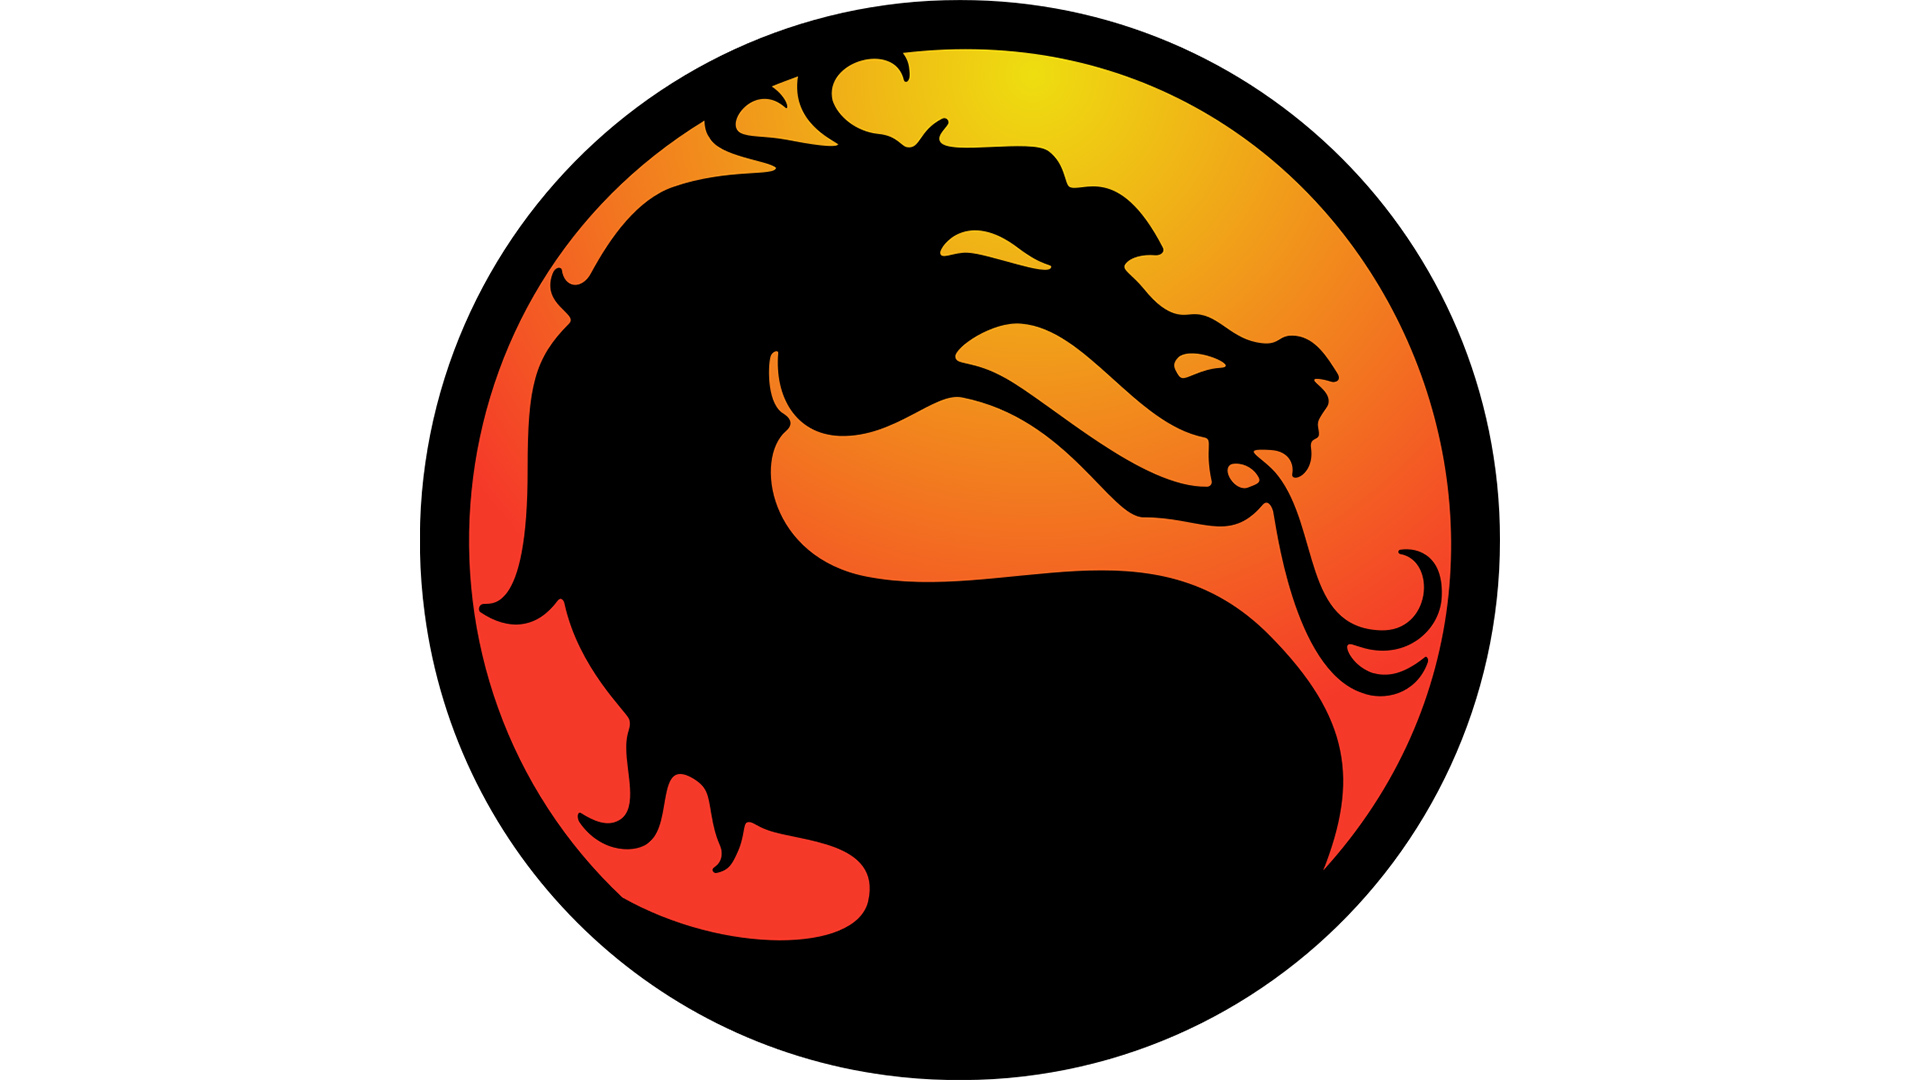 Mortal Kombat 12 Seemingly Teased By NetherRealm Producer